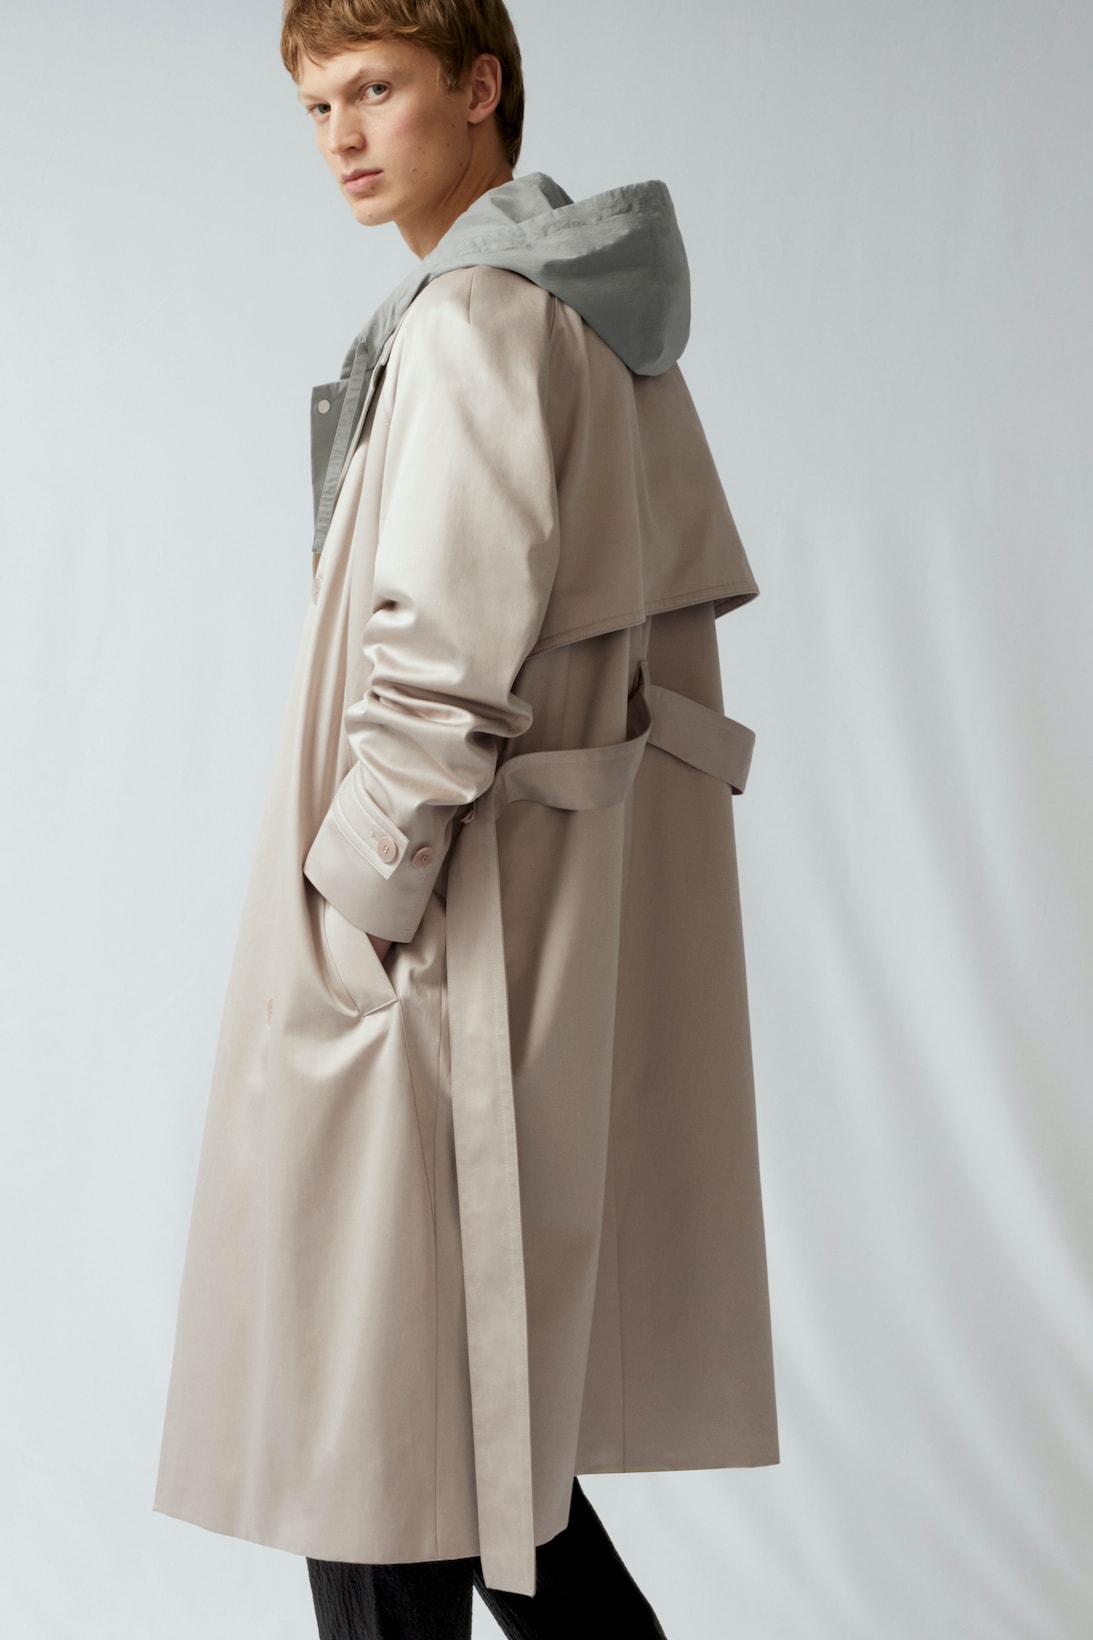 cos spring menswear summer collection lookbook jacket outerwear hoodie brown beige gray